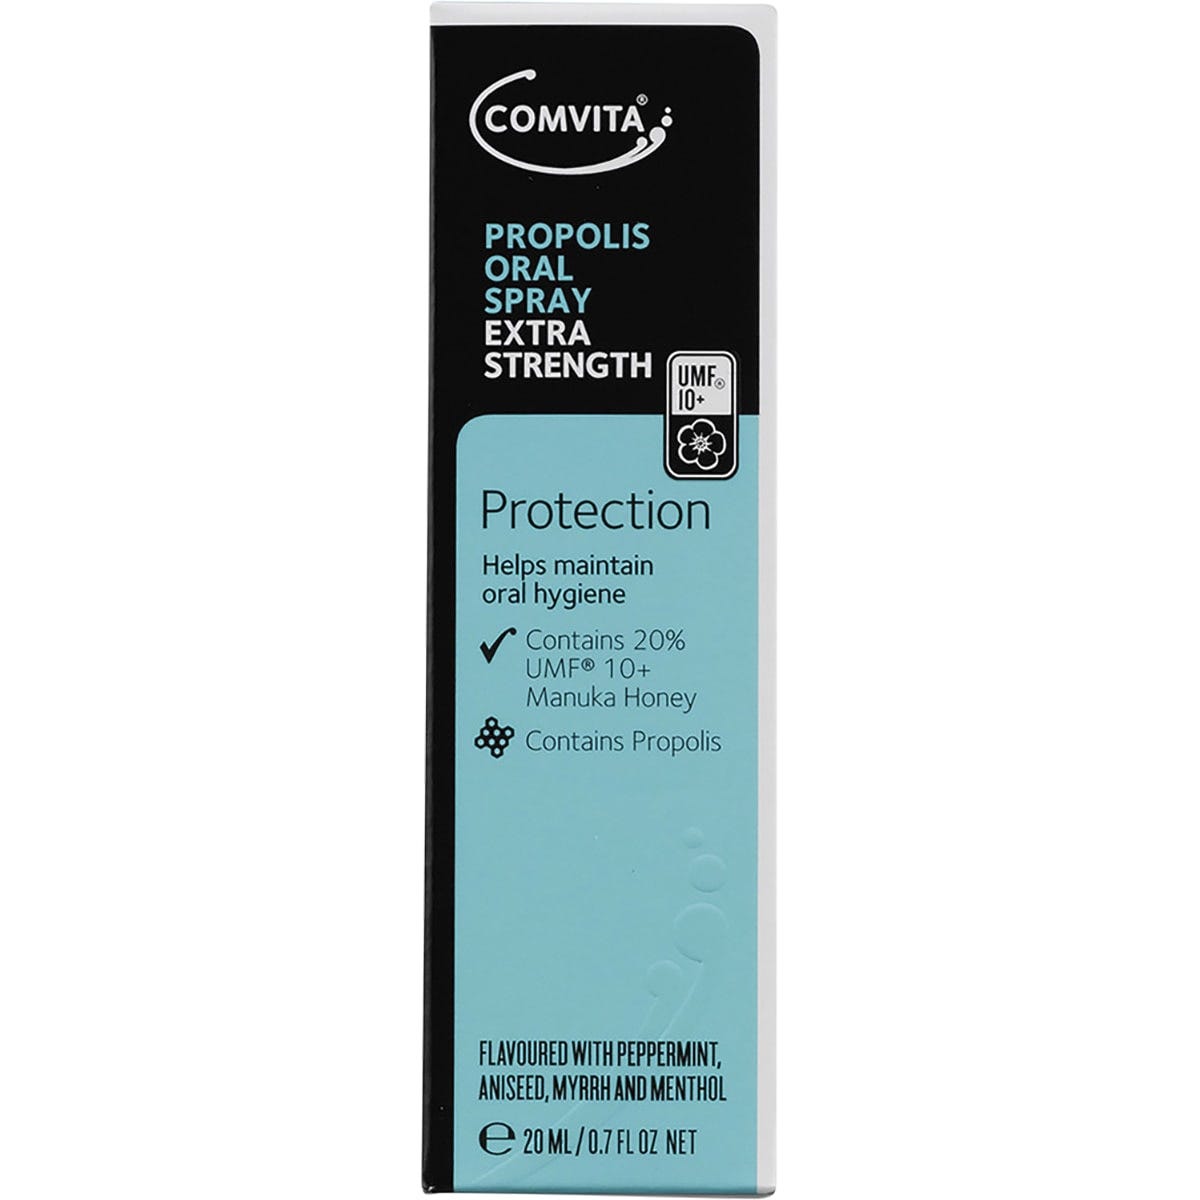 Comvita Propolis Oral Spray Extra Strength